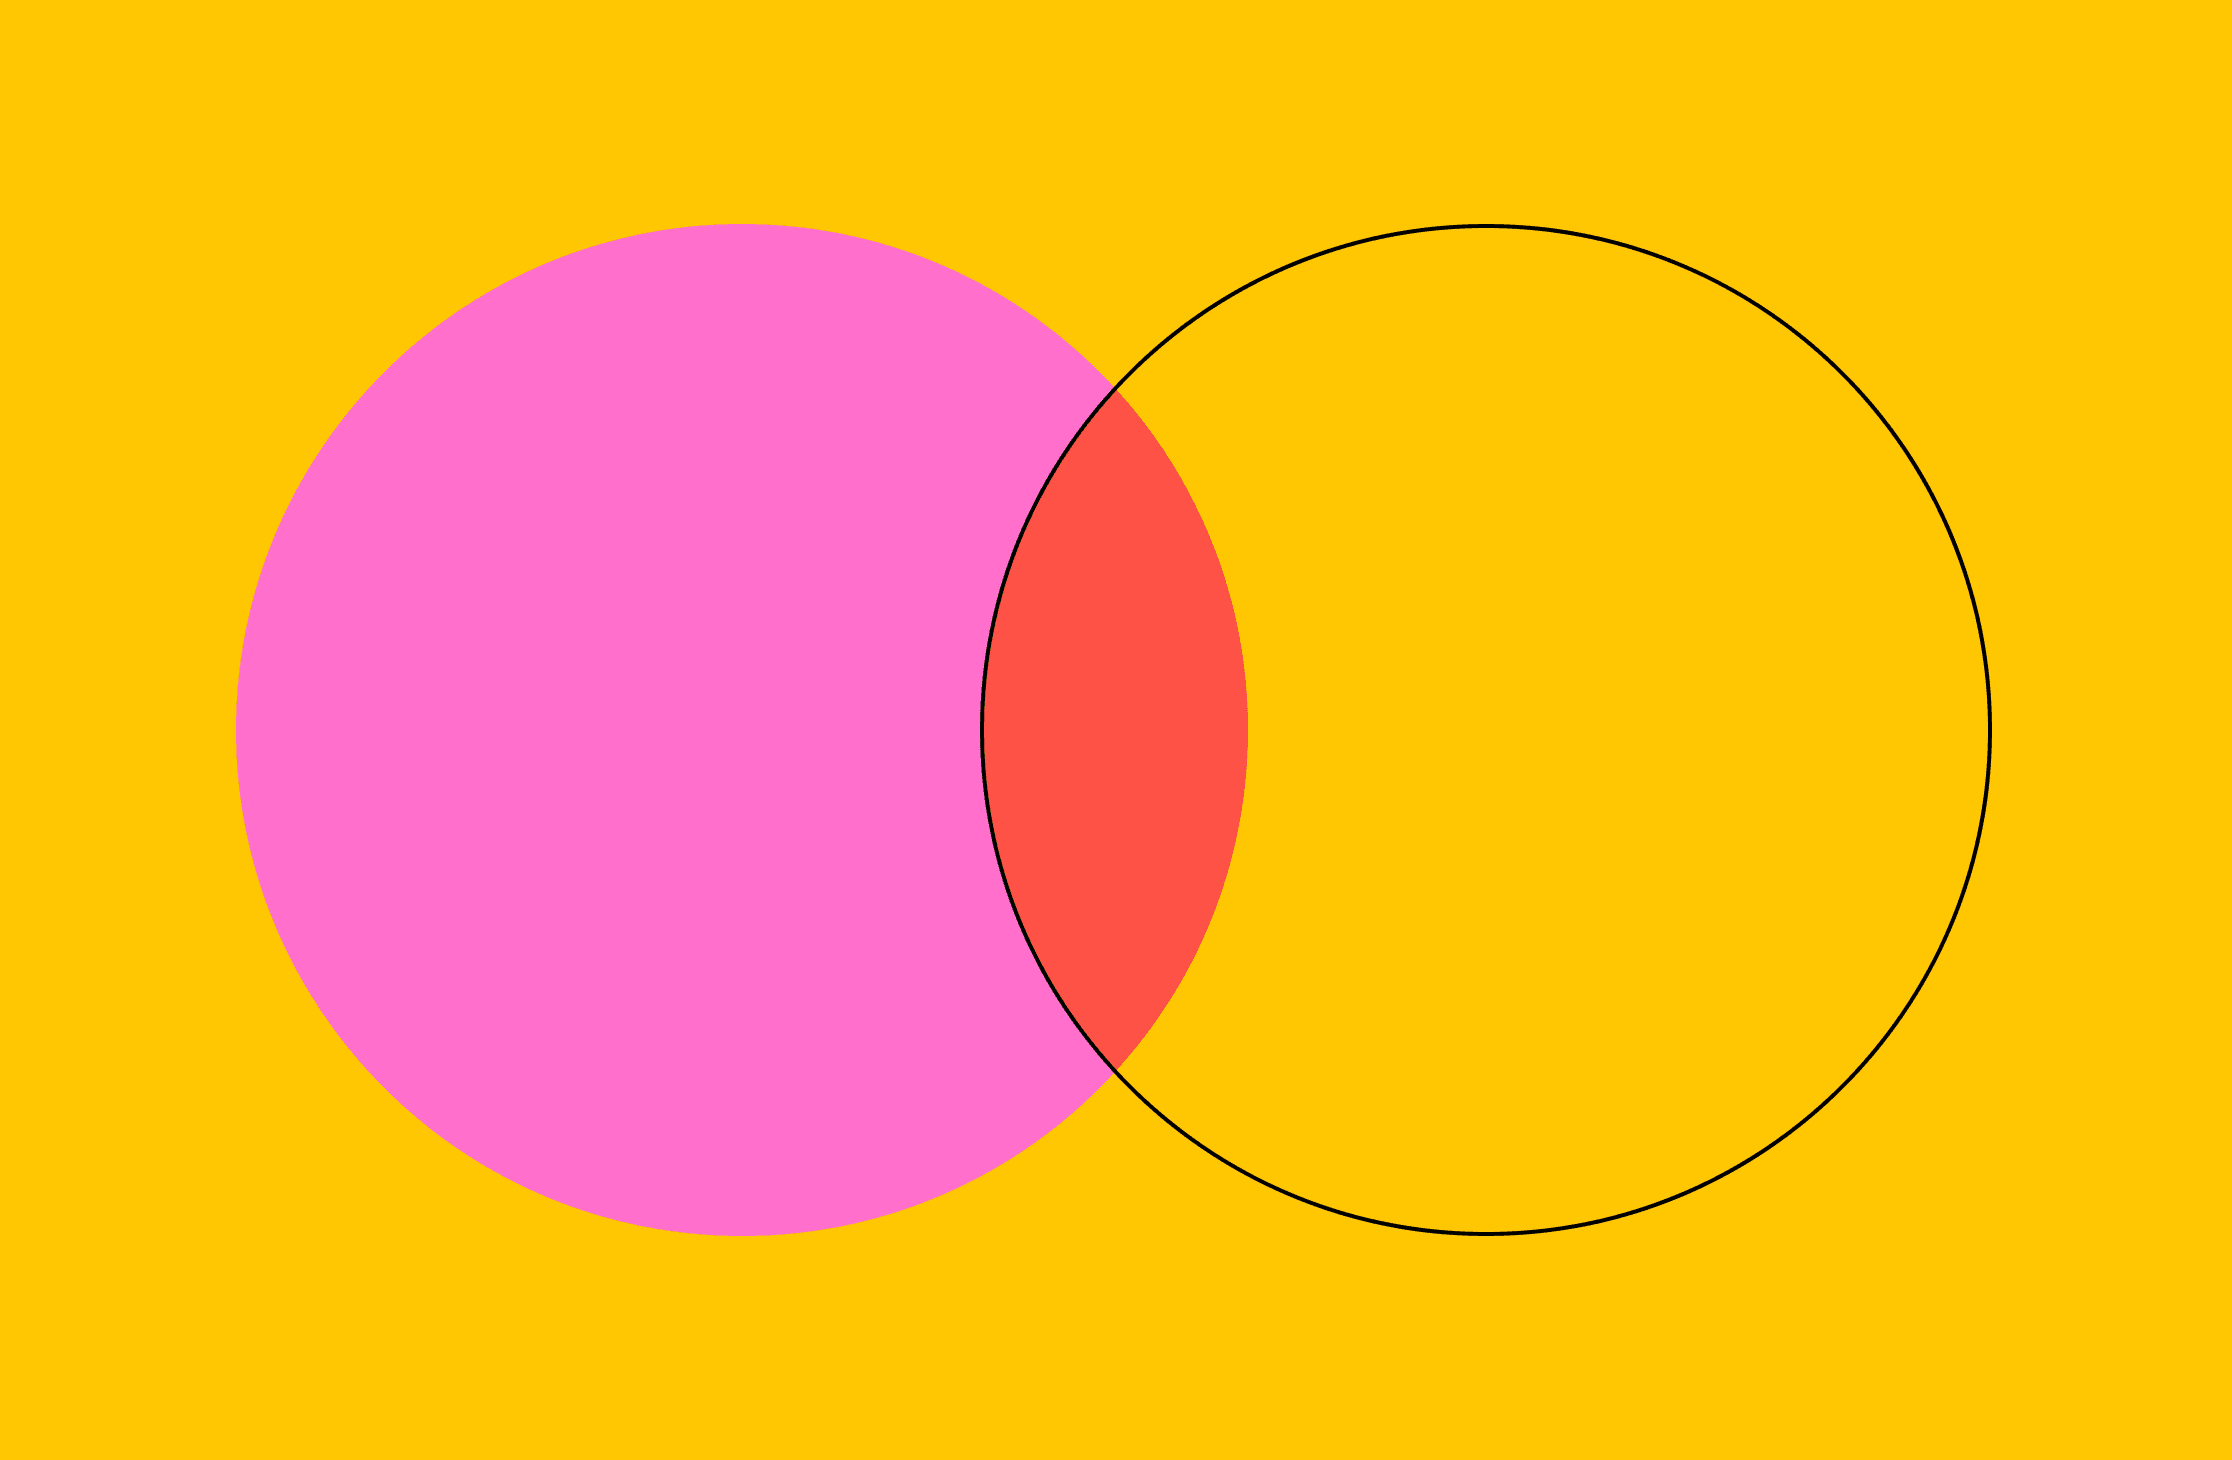 Stylized illustration of a Venn diagram.